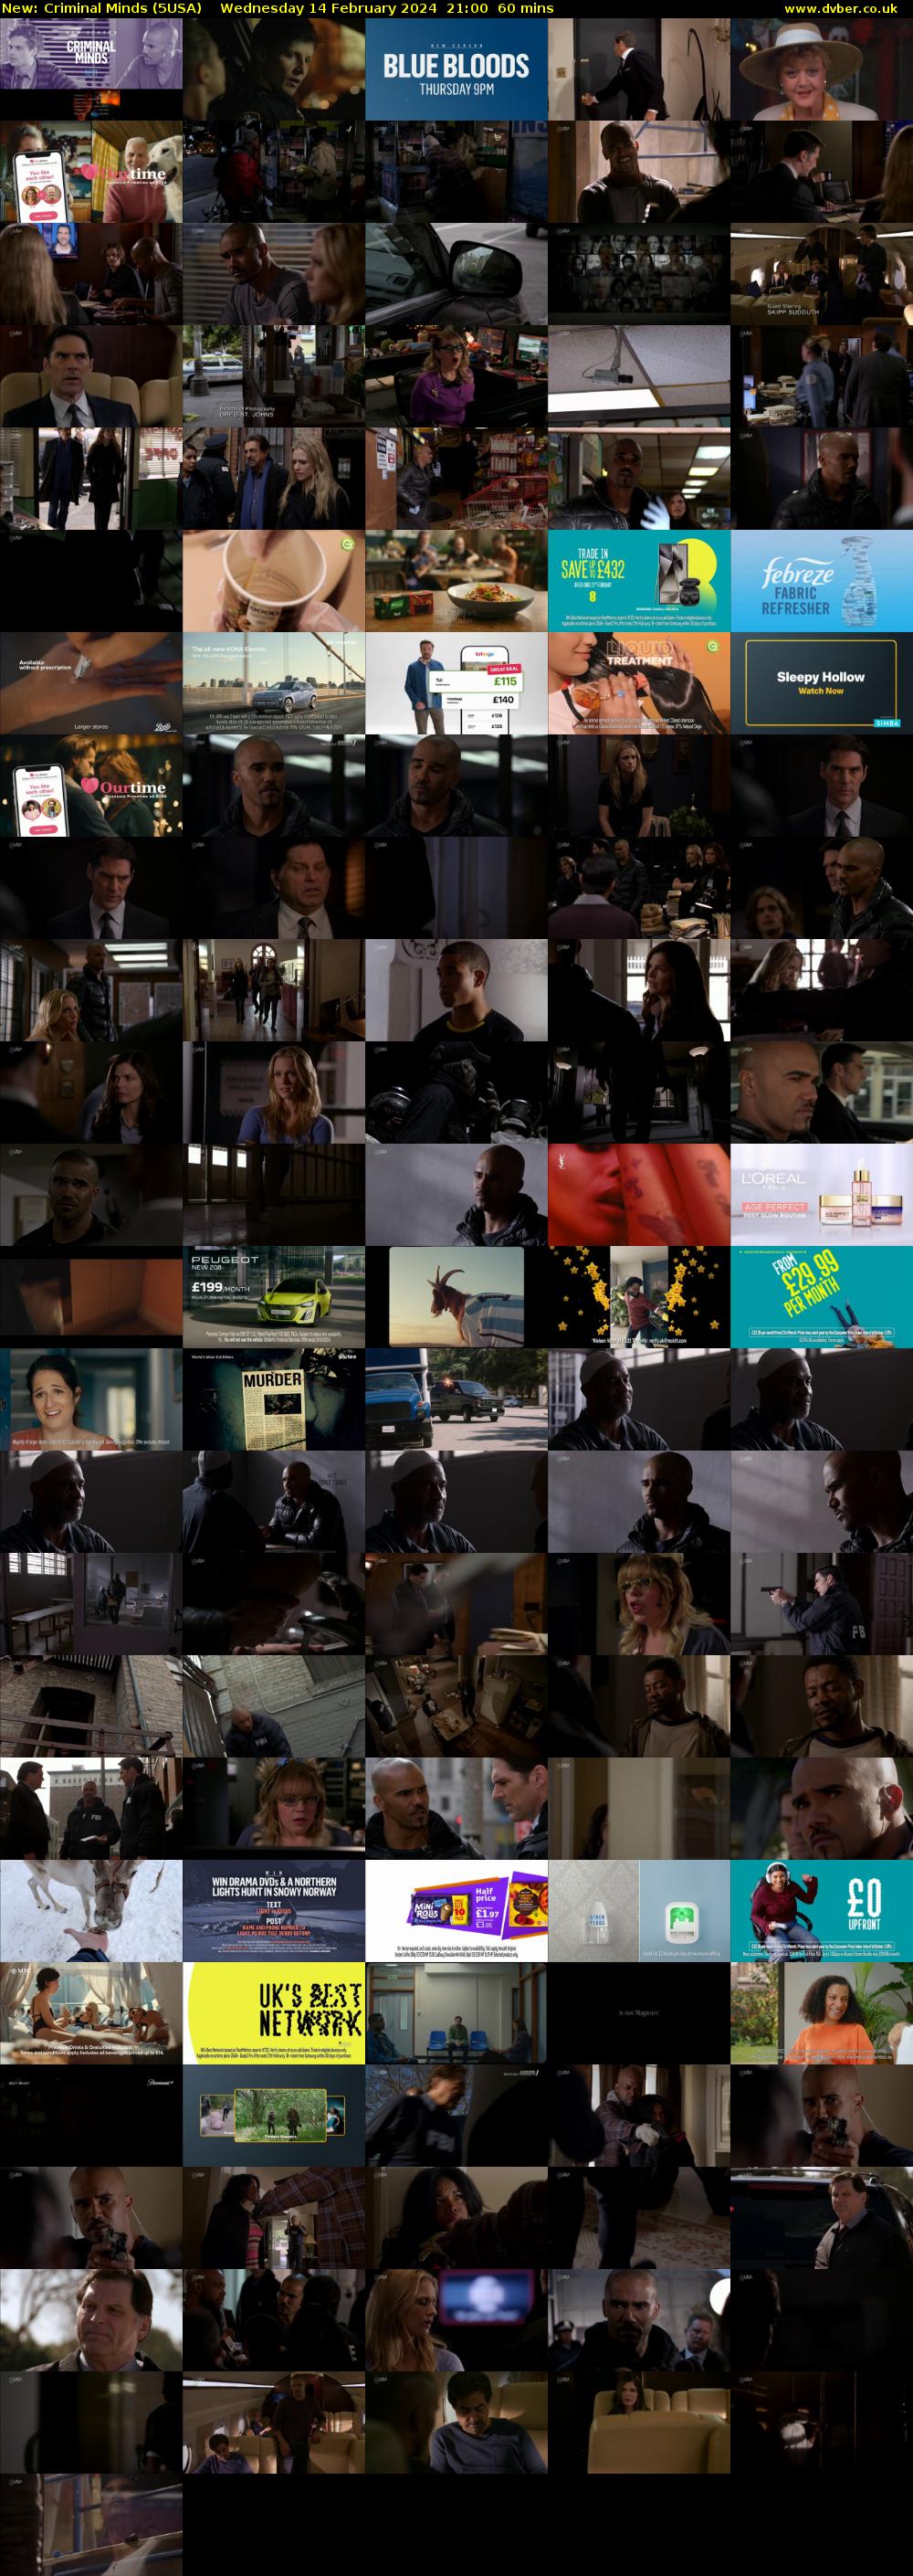 Criminal Minds (5USA) Wednesday 14 February 2024 21:00 - 22:00